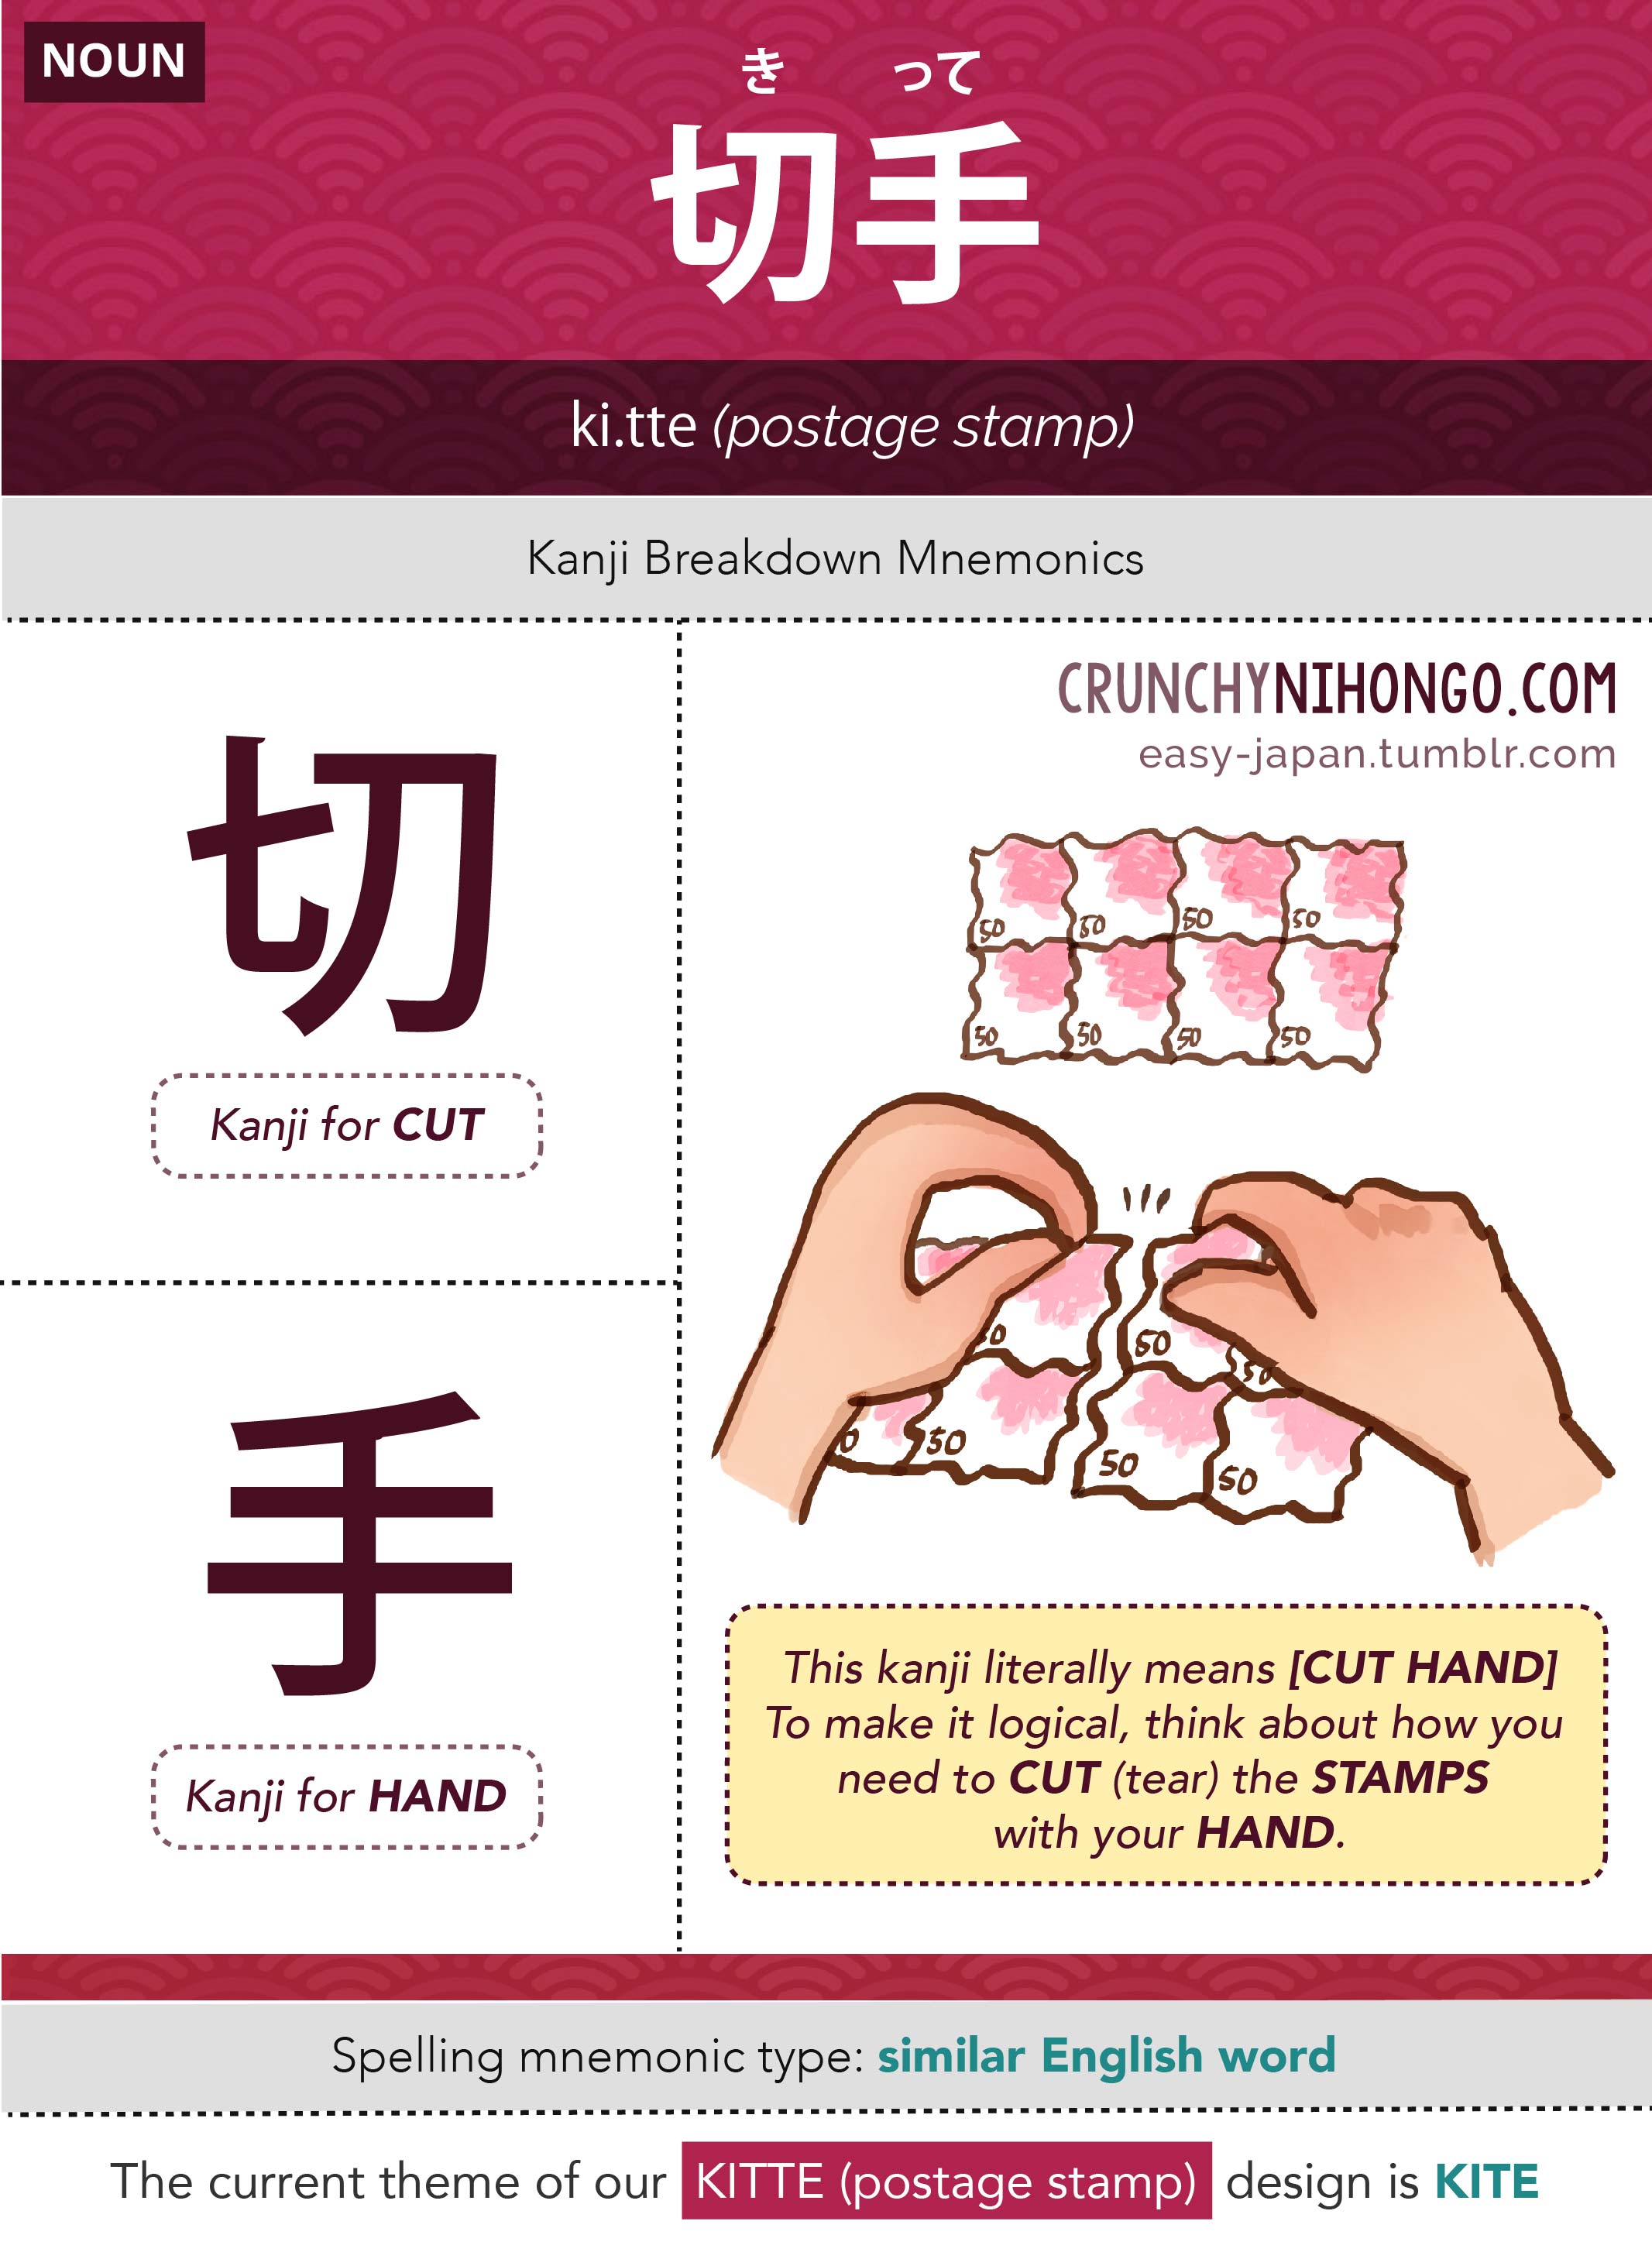 n5-vocabulary-kitte-stamp